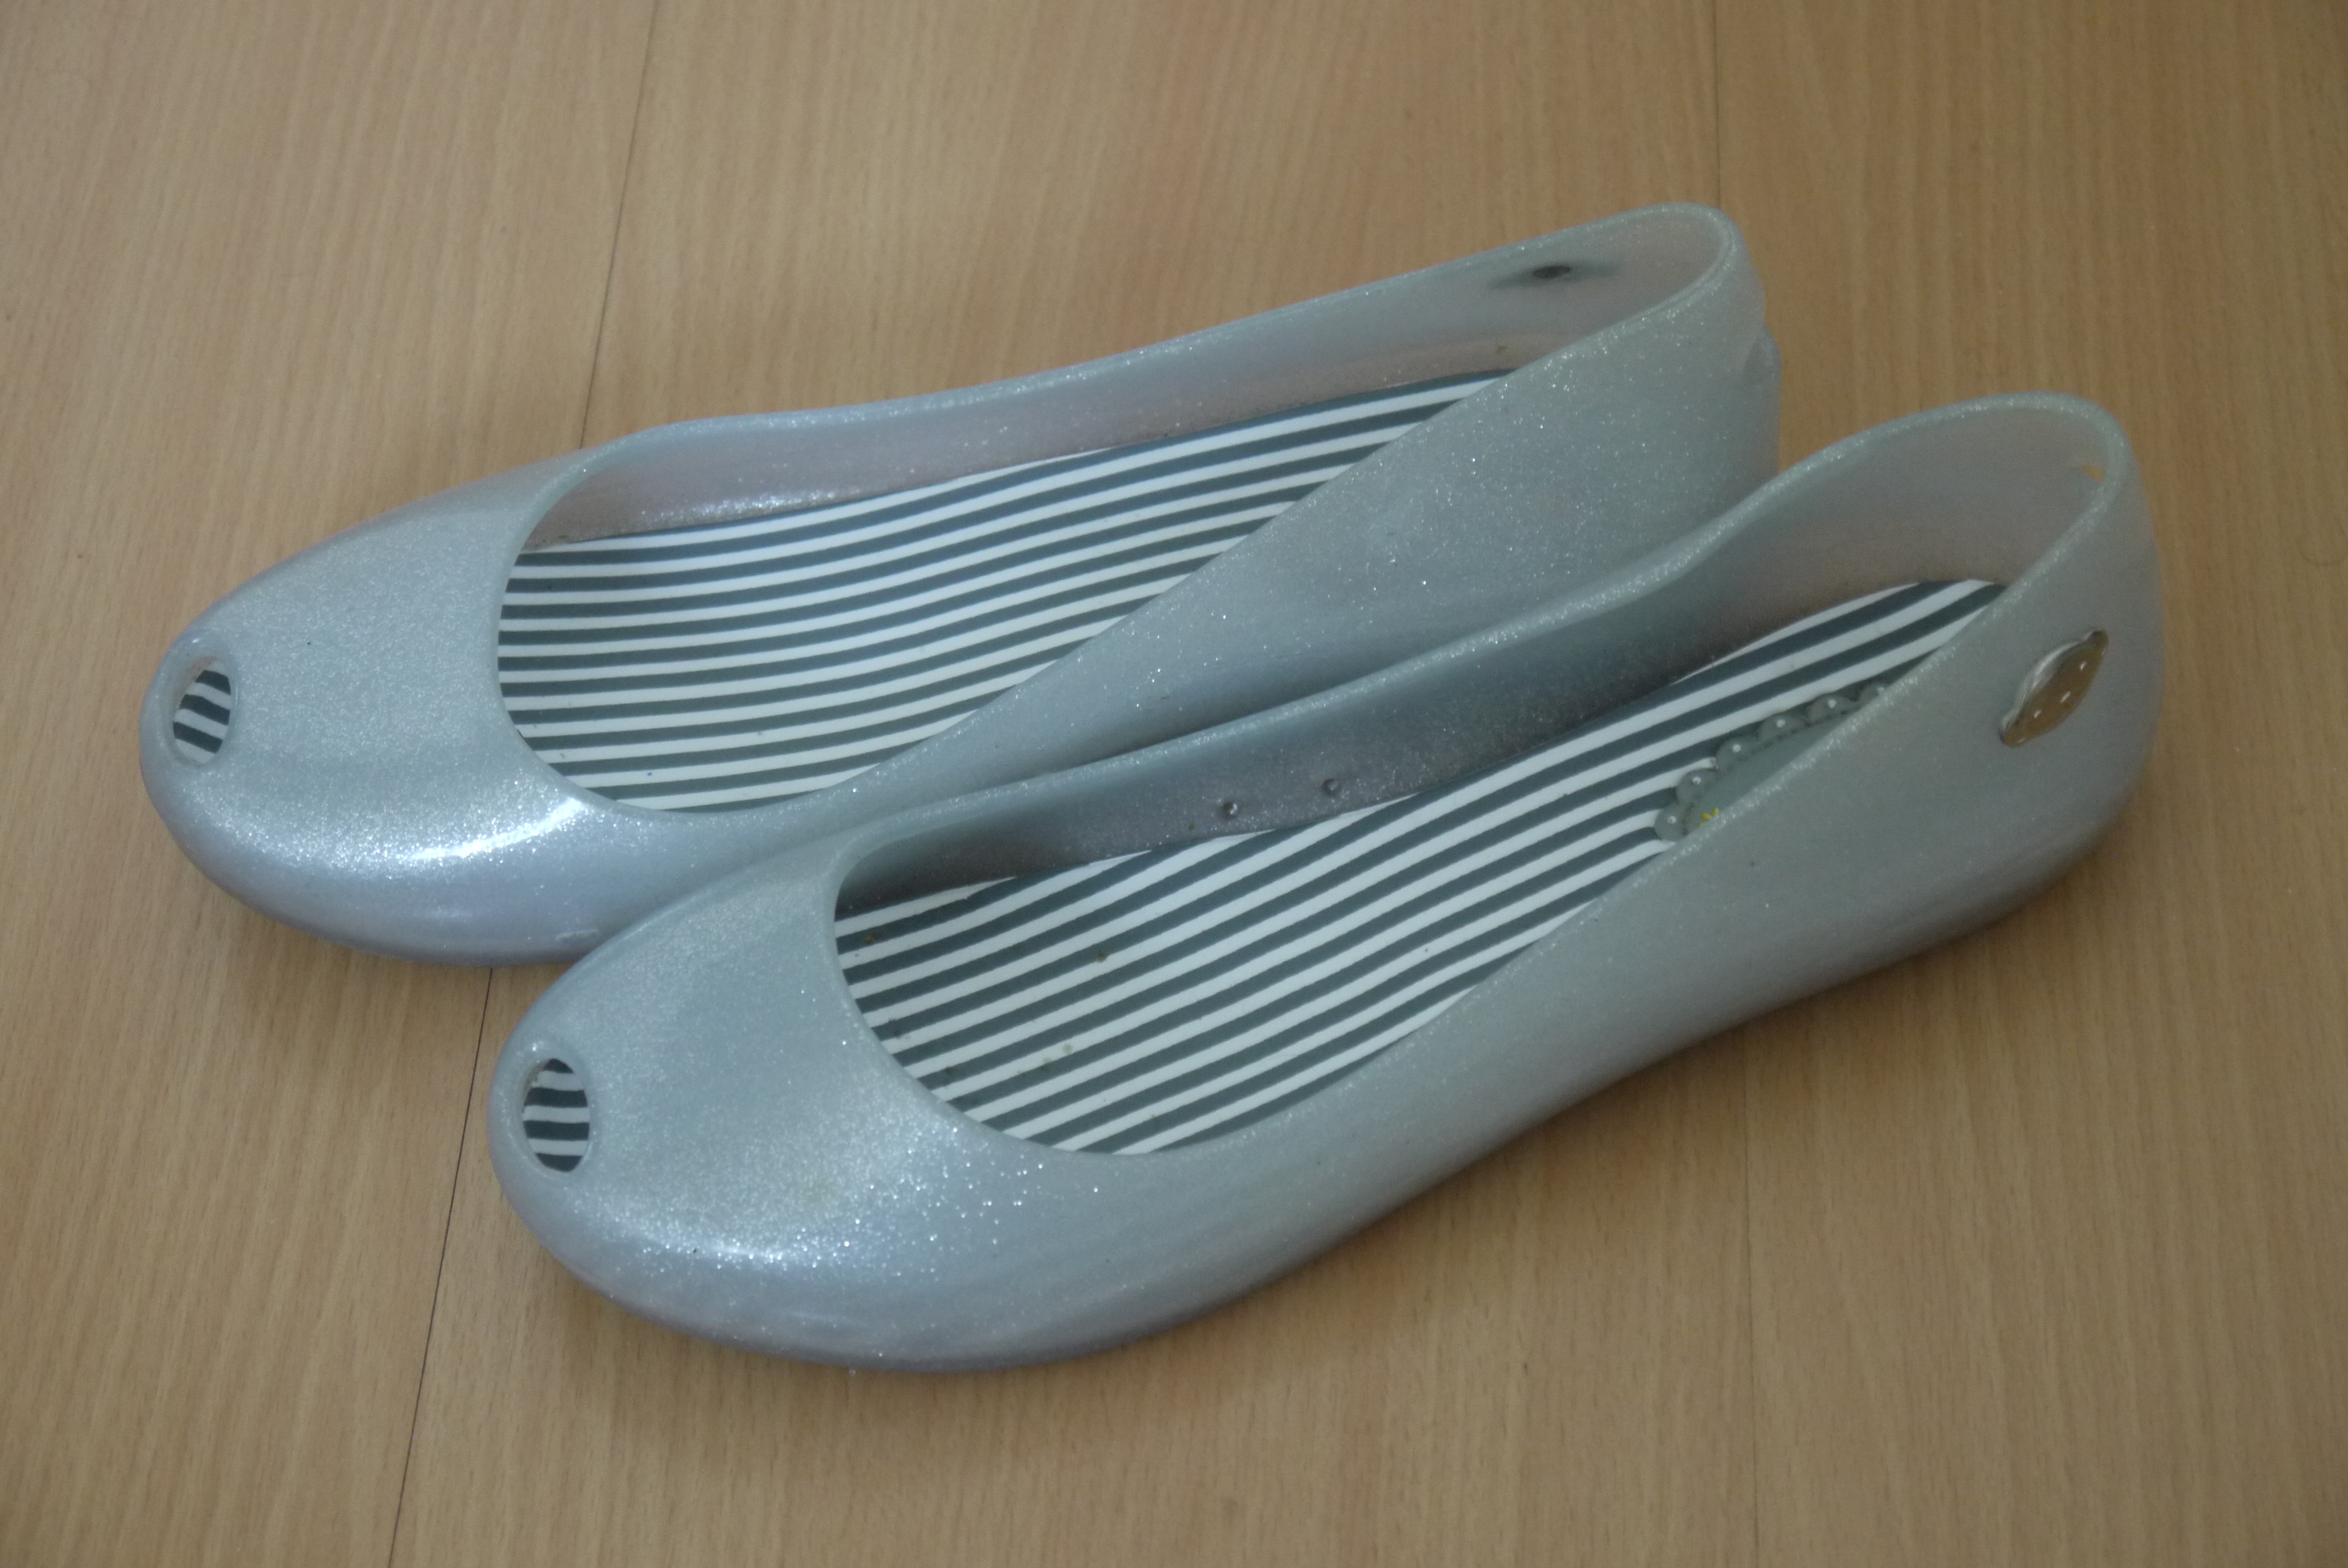 rubber shoes for rainy season